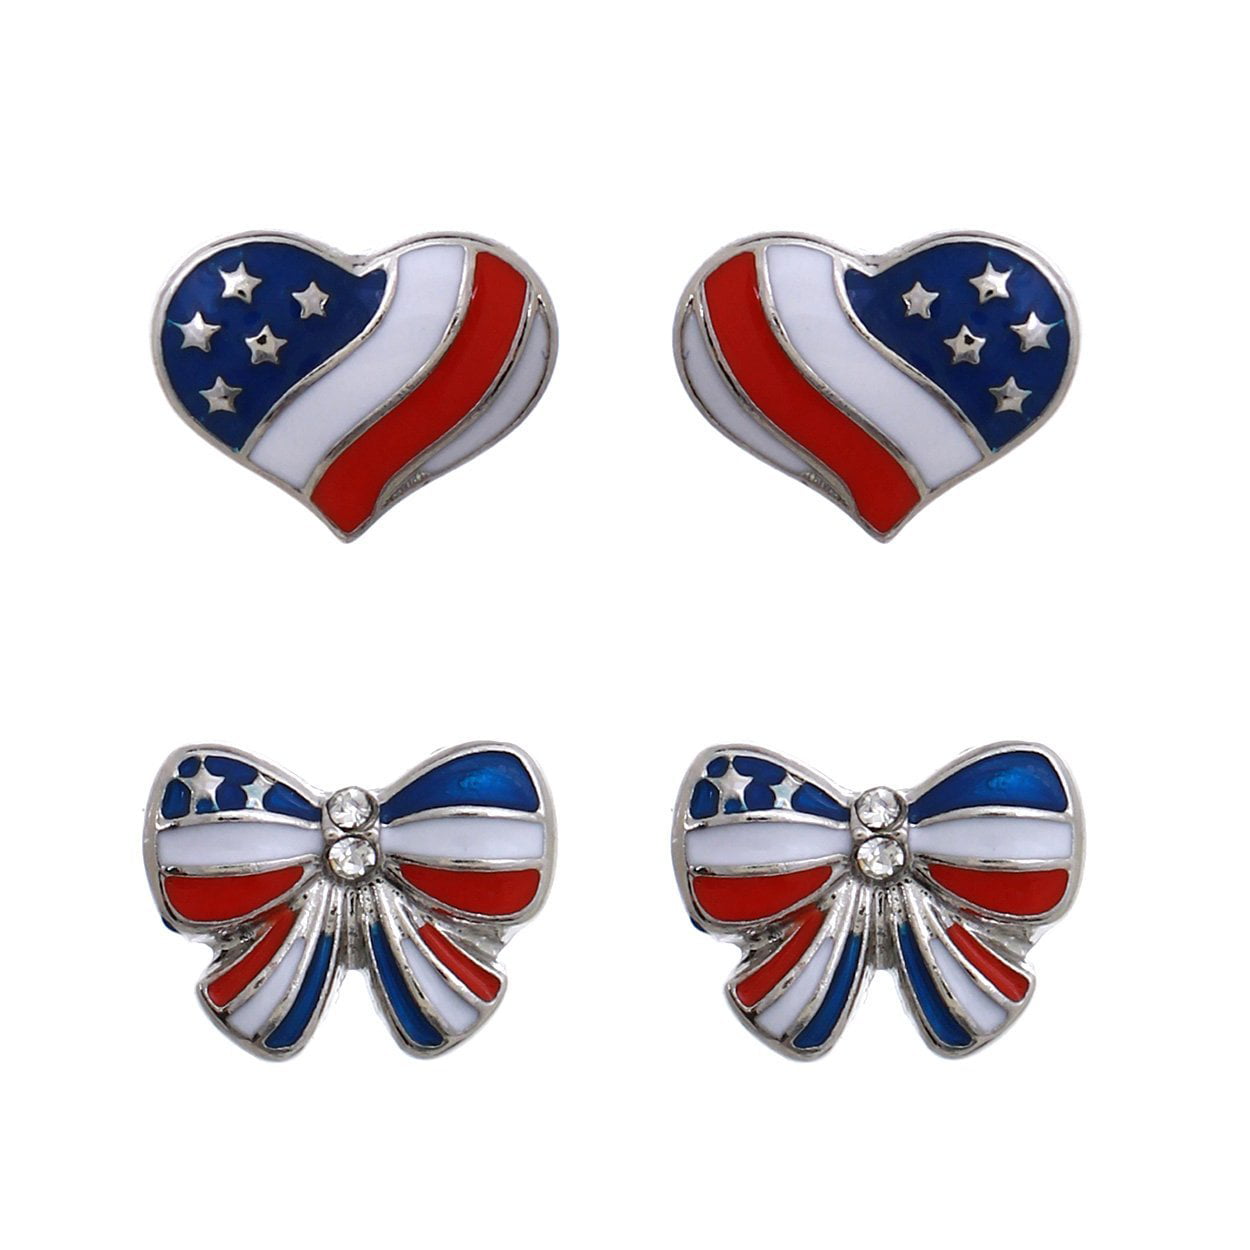 red white blue heart enamel earrings flag heart earrings small patriotic Stars and Stripes charm earrings U.S gold heart flags